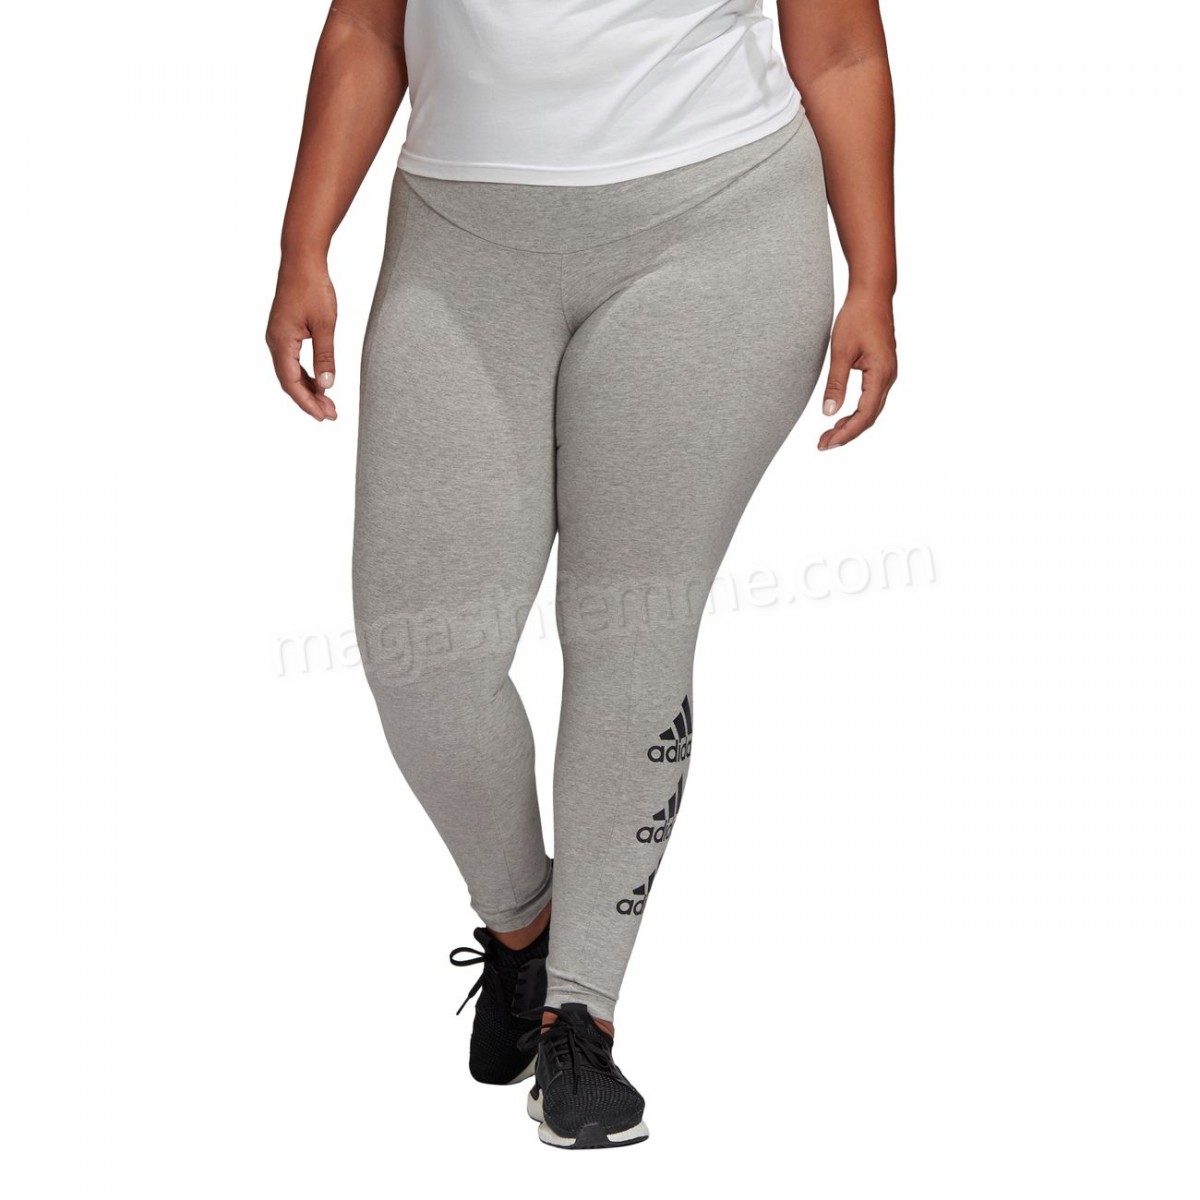 Adidas-Fitness femme ADIDAS Collant femme adidas Stacked Logo en solde - -3